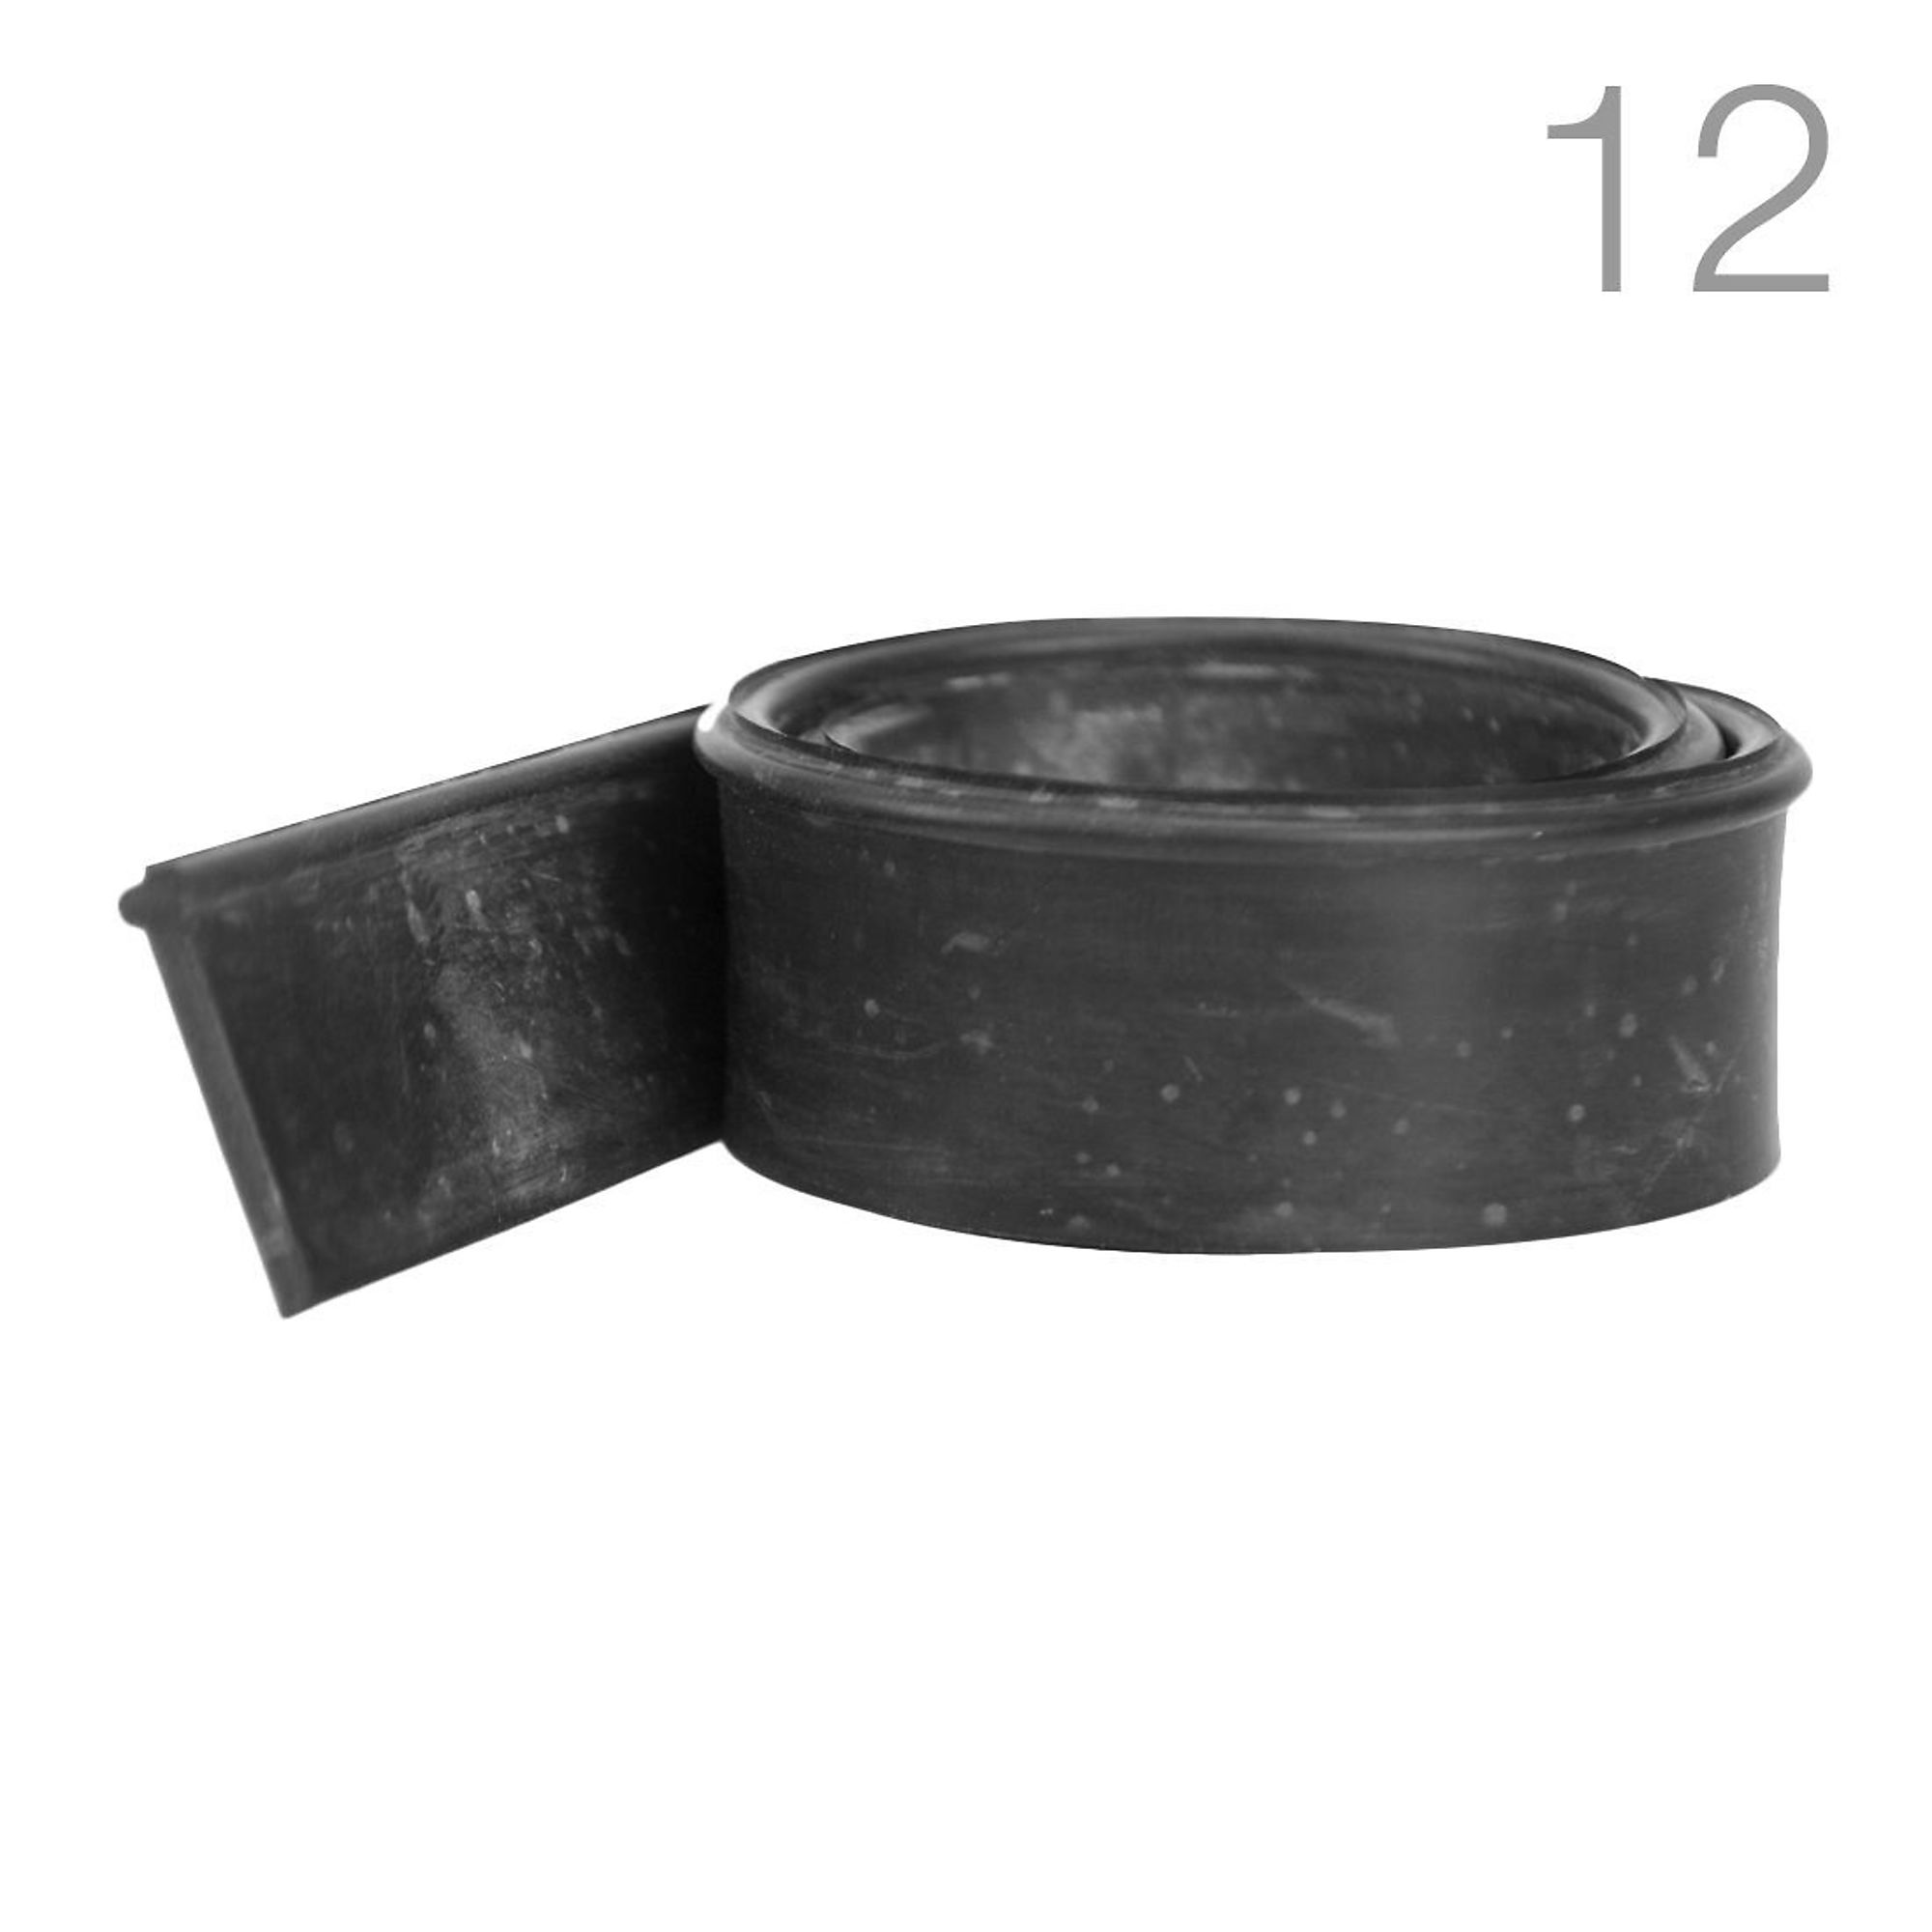 BlackDiamond, Flat Top Medium Squeegee Rubber 12 Pack - 22Inch, Model 012-05-51